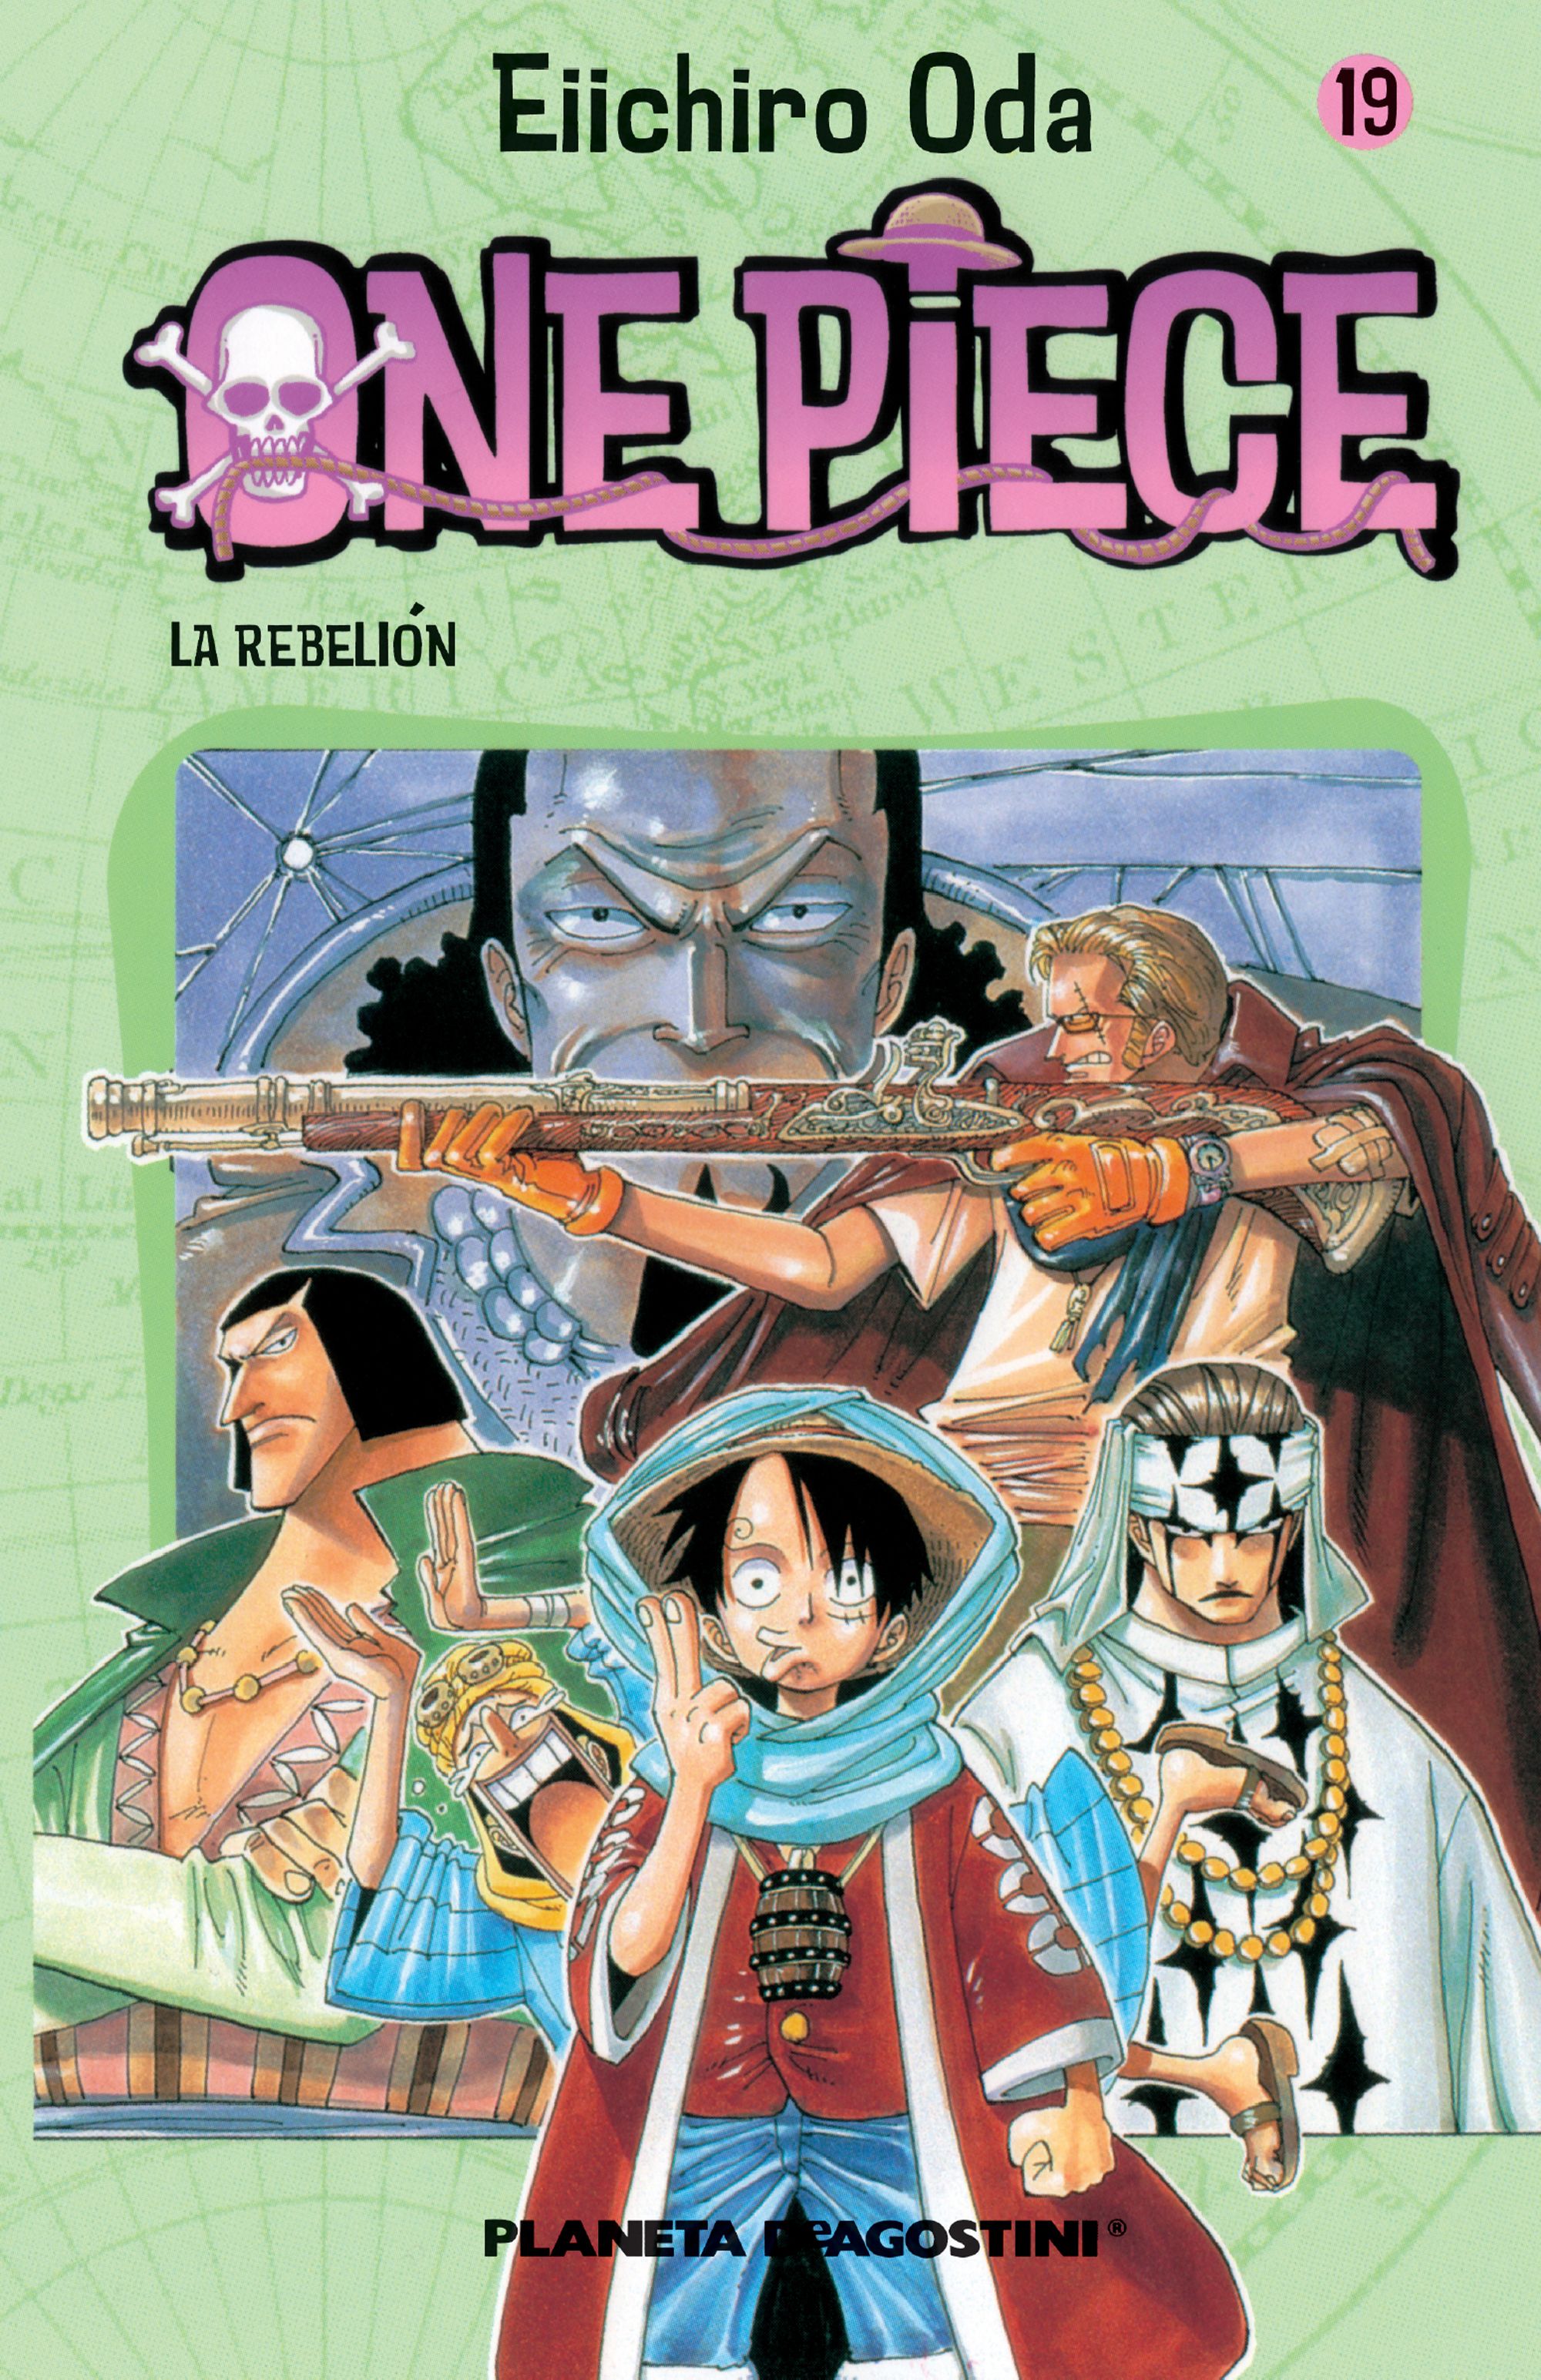 One Piece nº 19 Universo Funko Planeta de cómics mangas juegos de